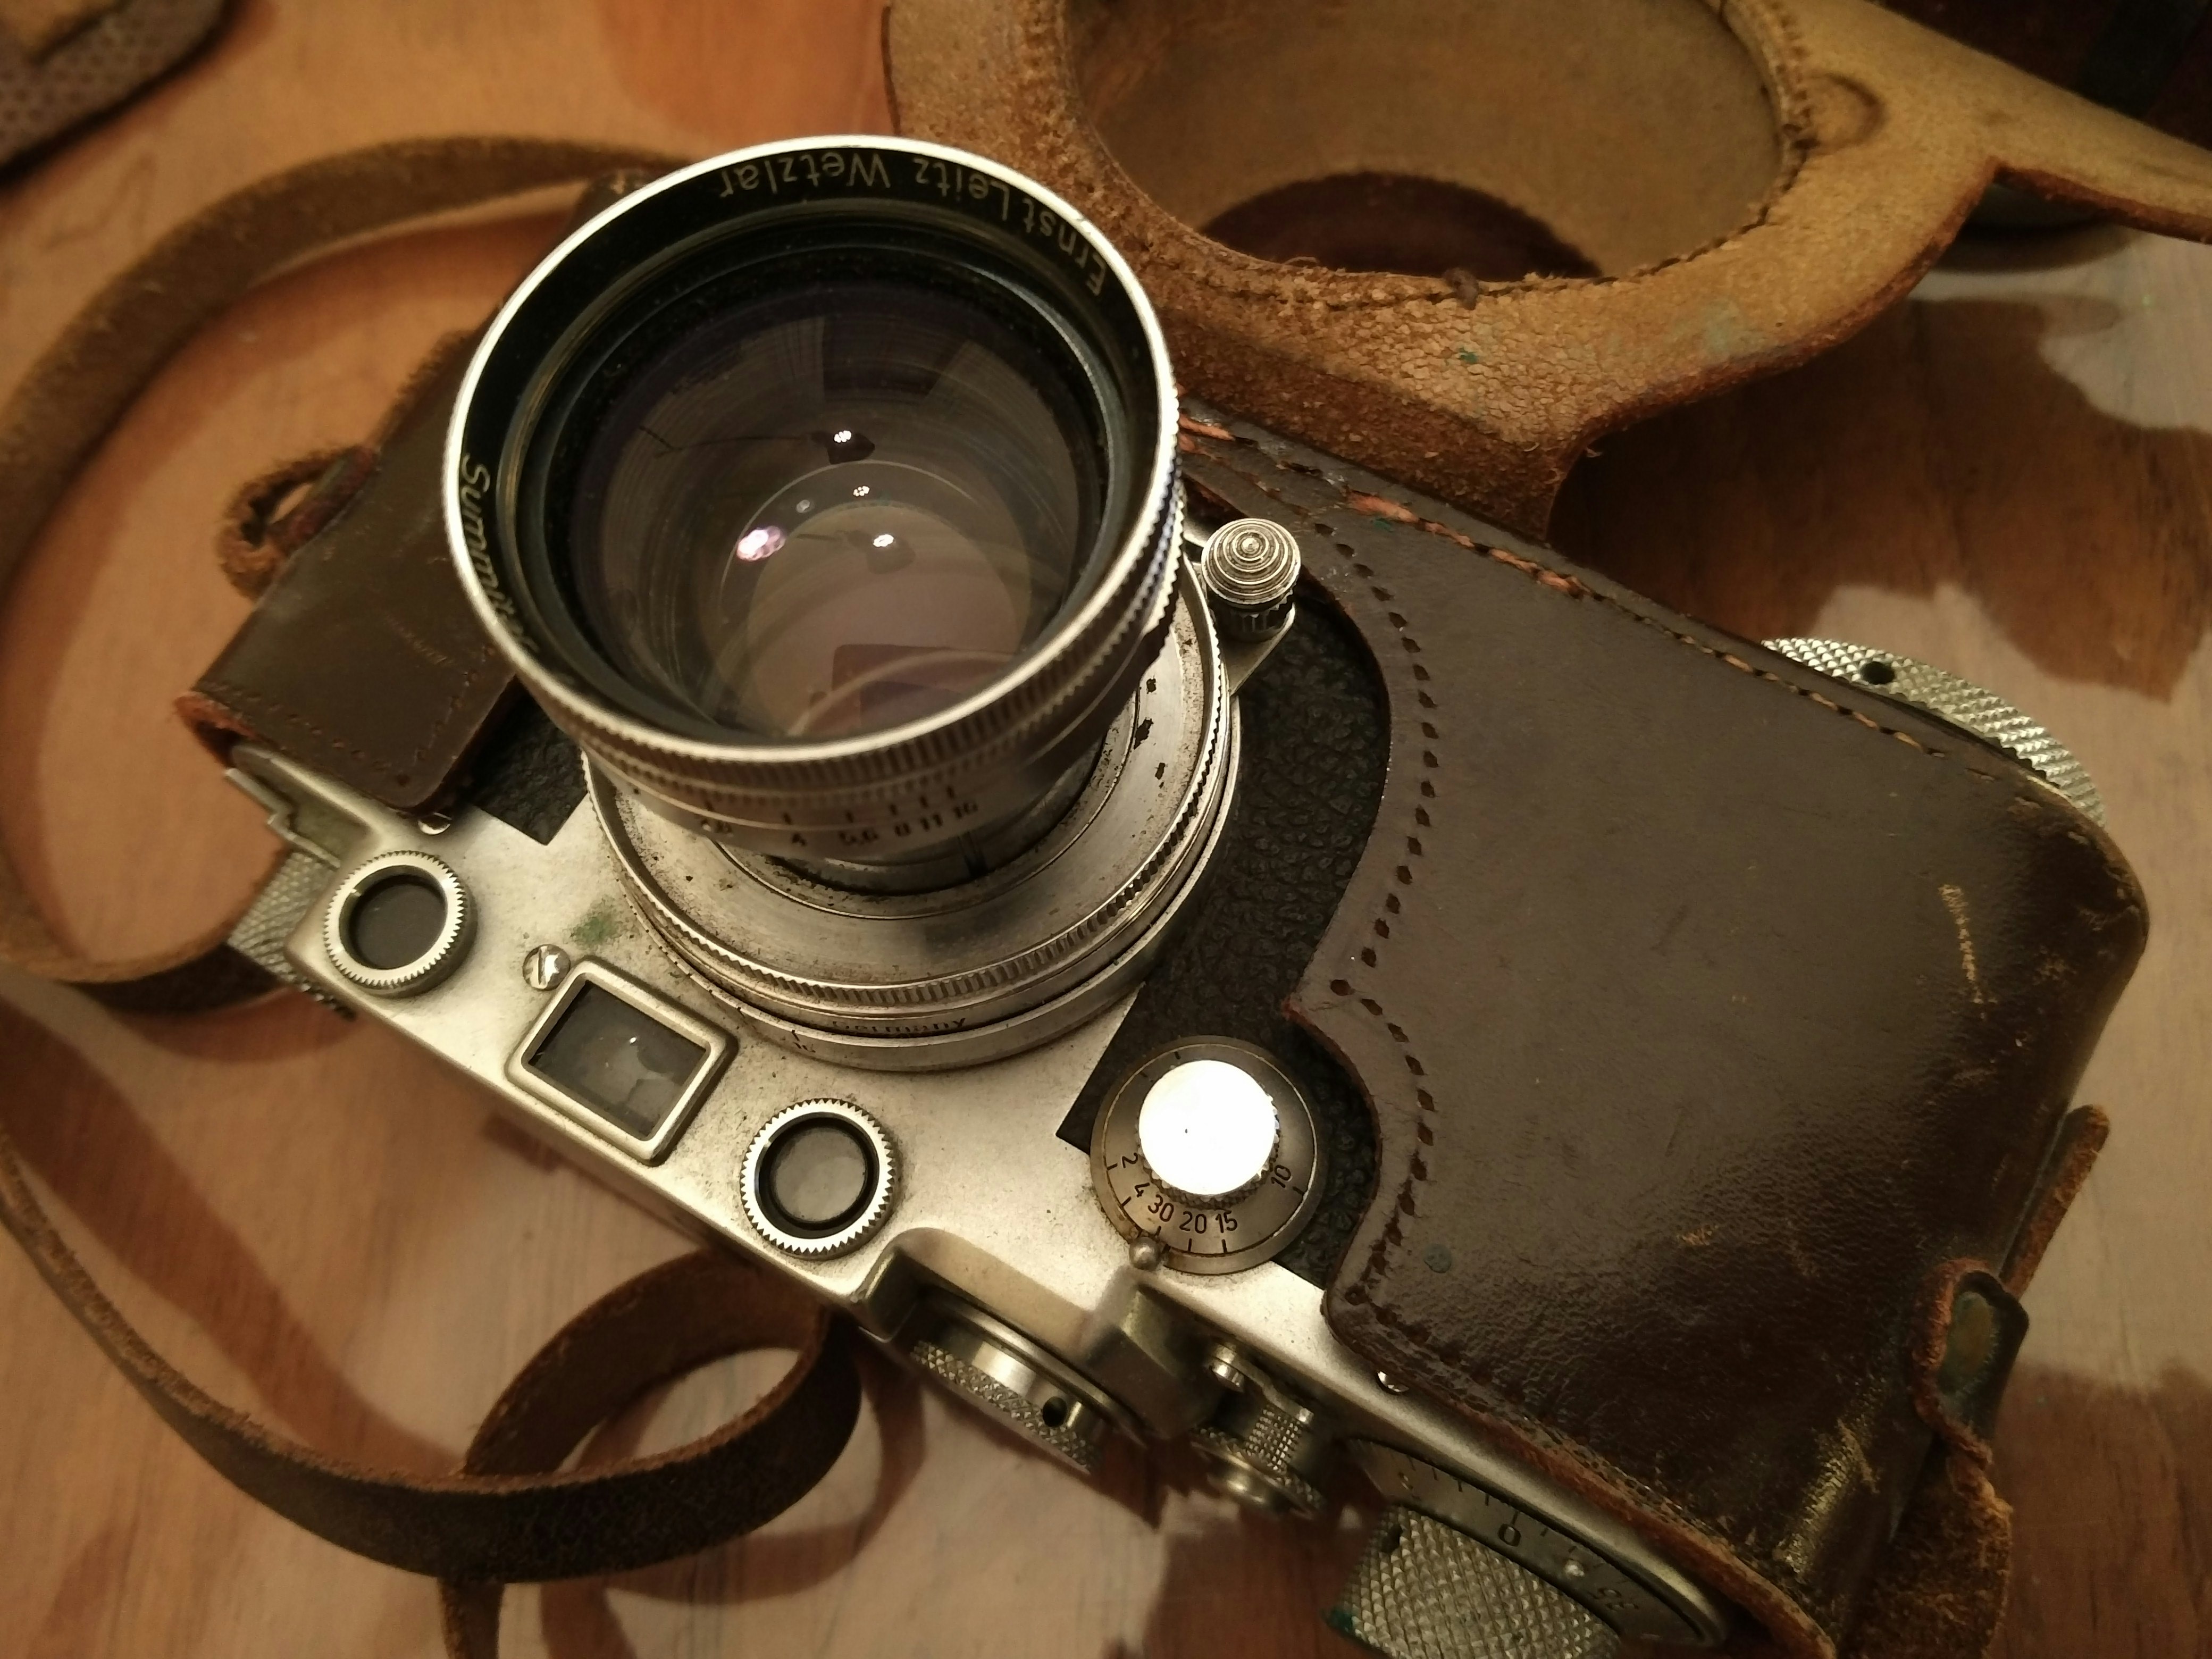 gray DSLR camera